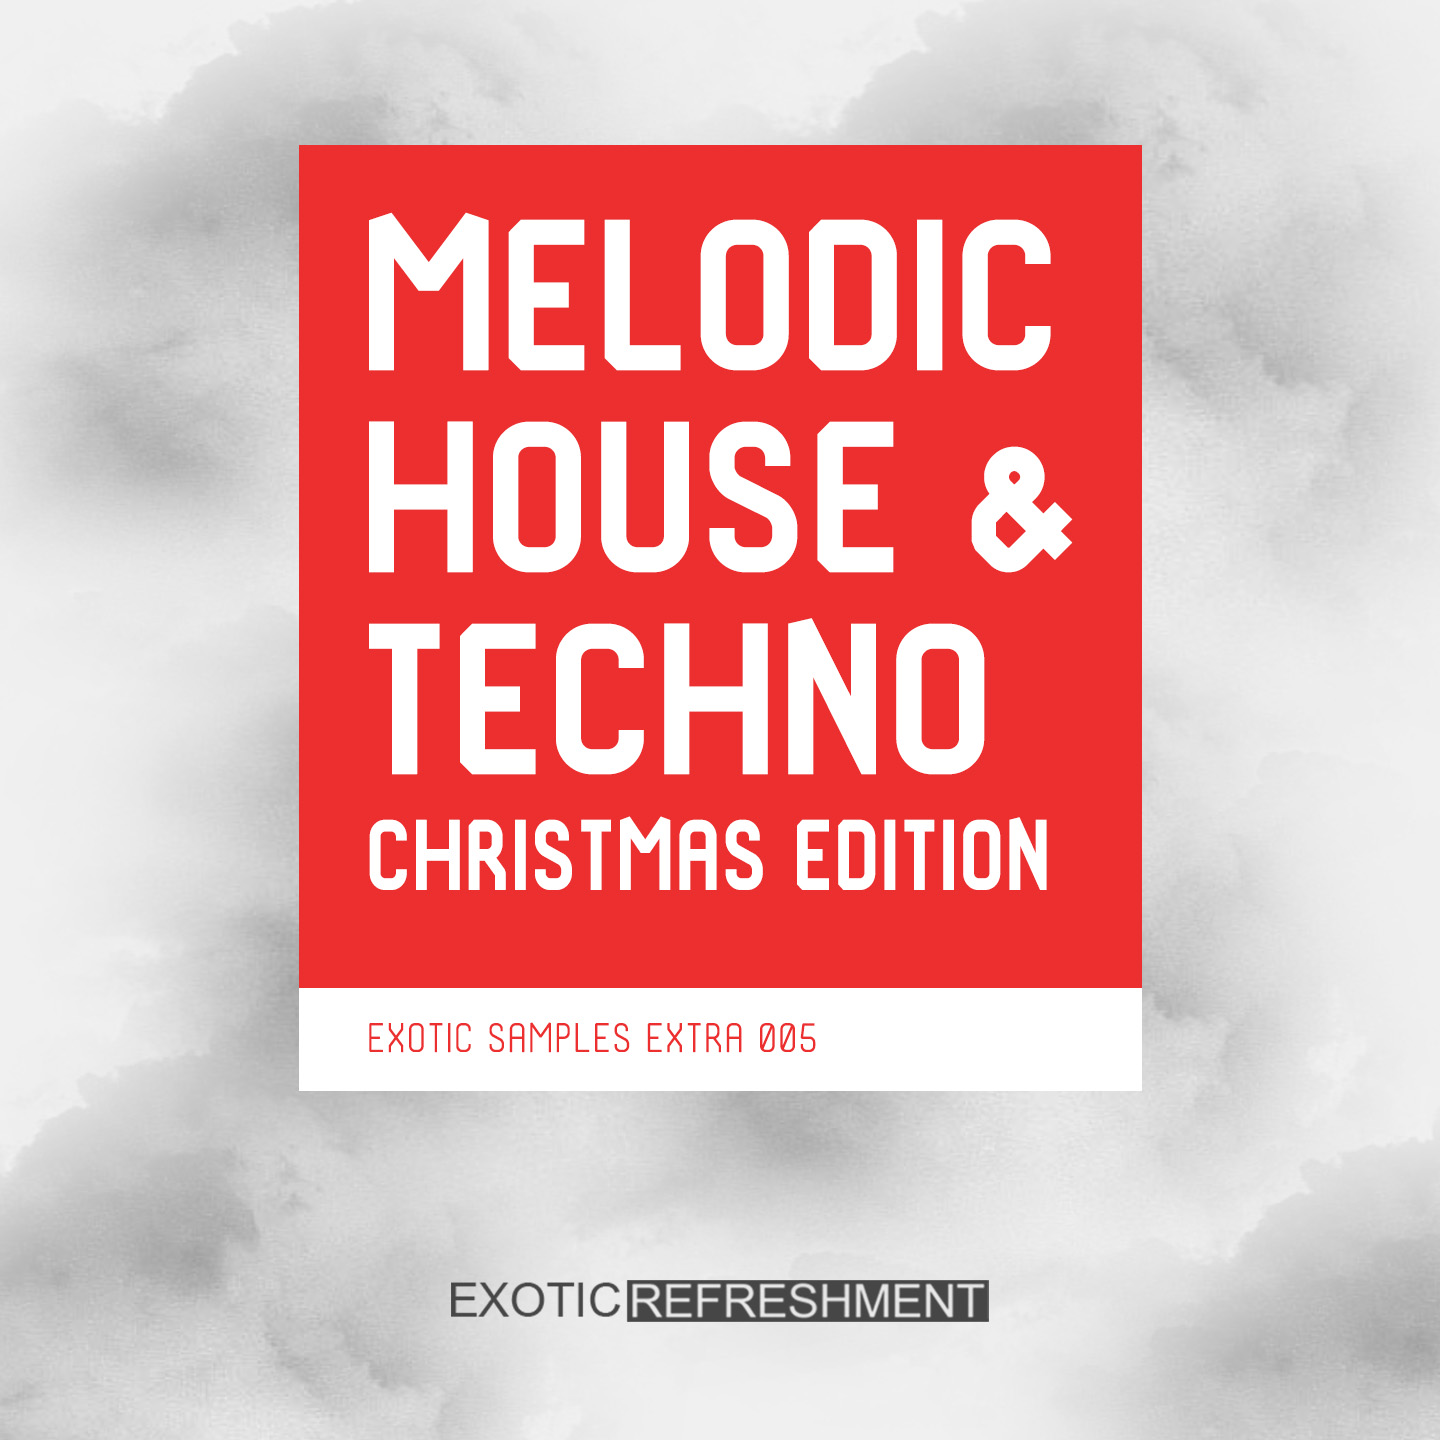 Melodic House & Techno Christmas Edition